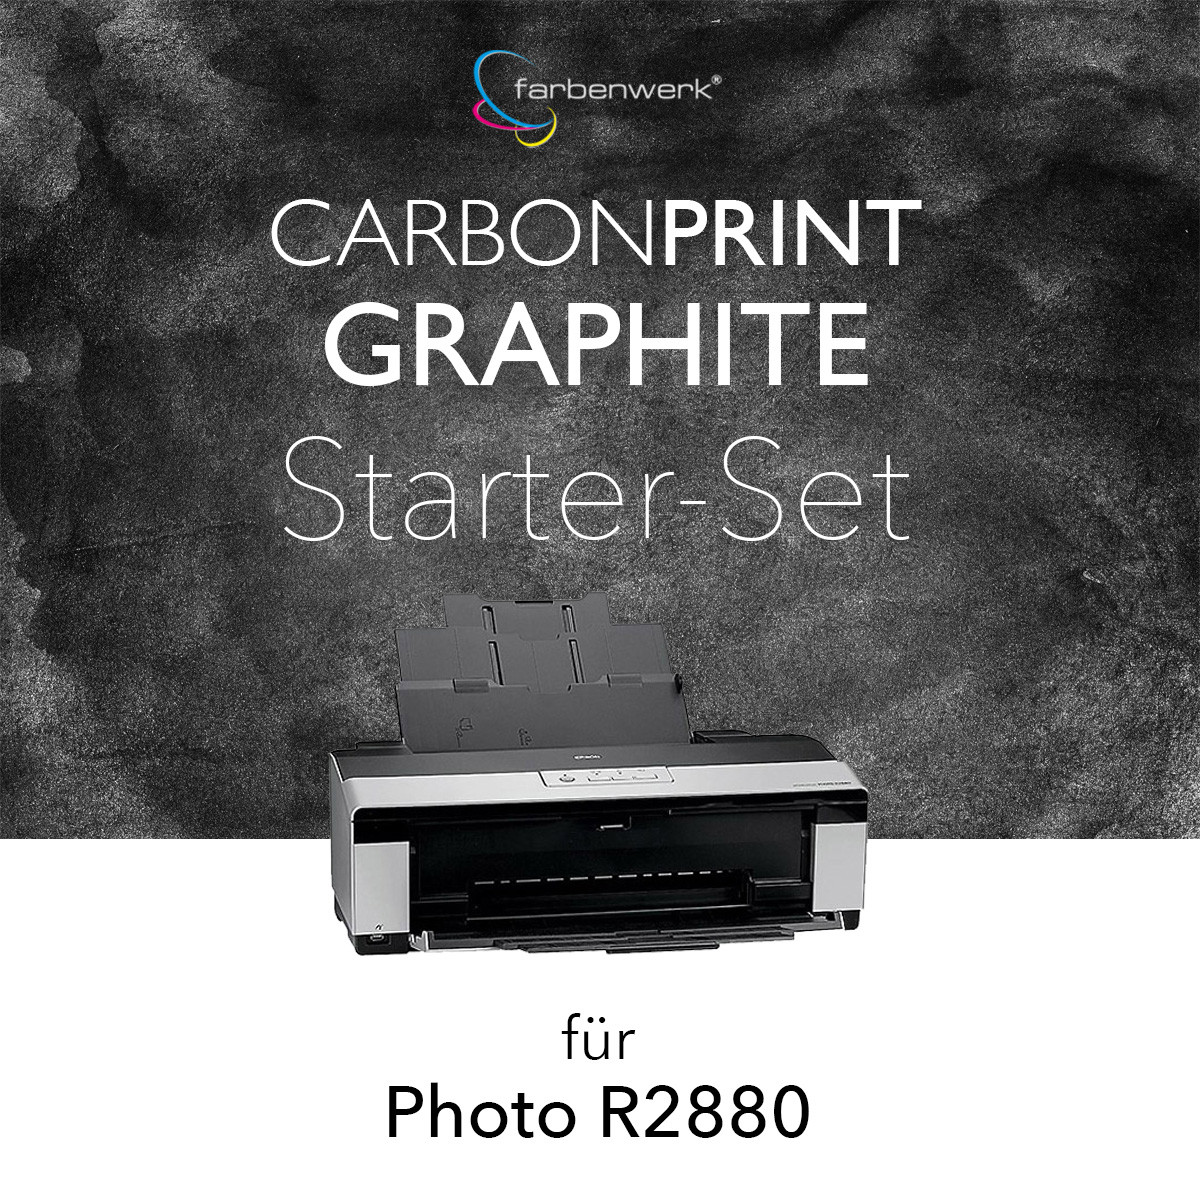 Starter-Set Carbonprint Graphite for Photo R2880